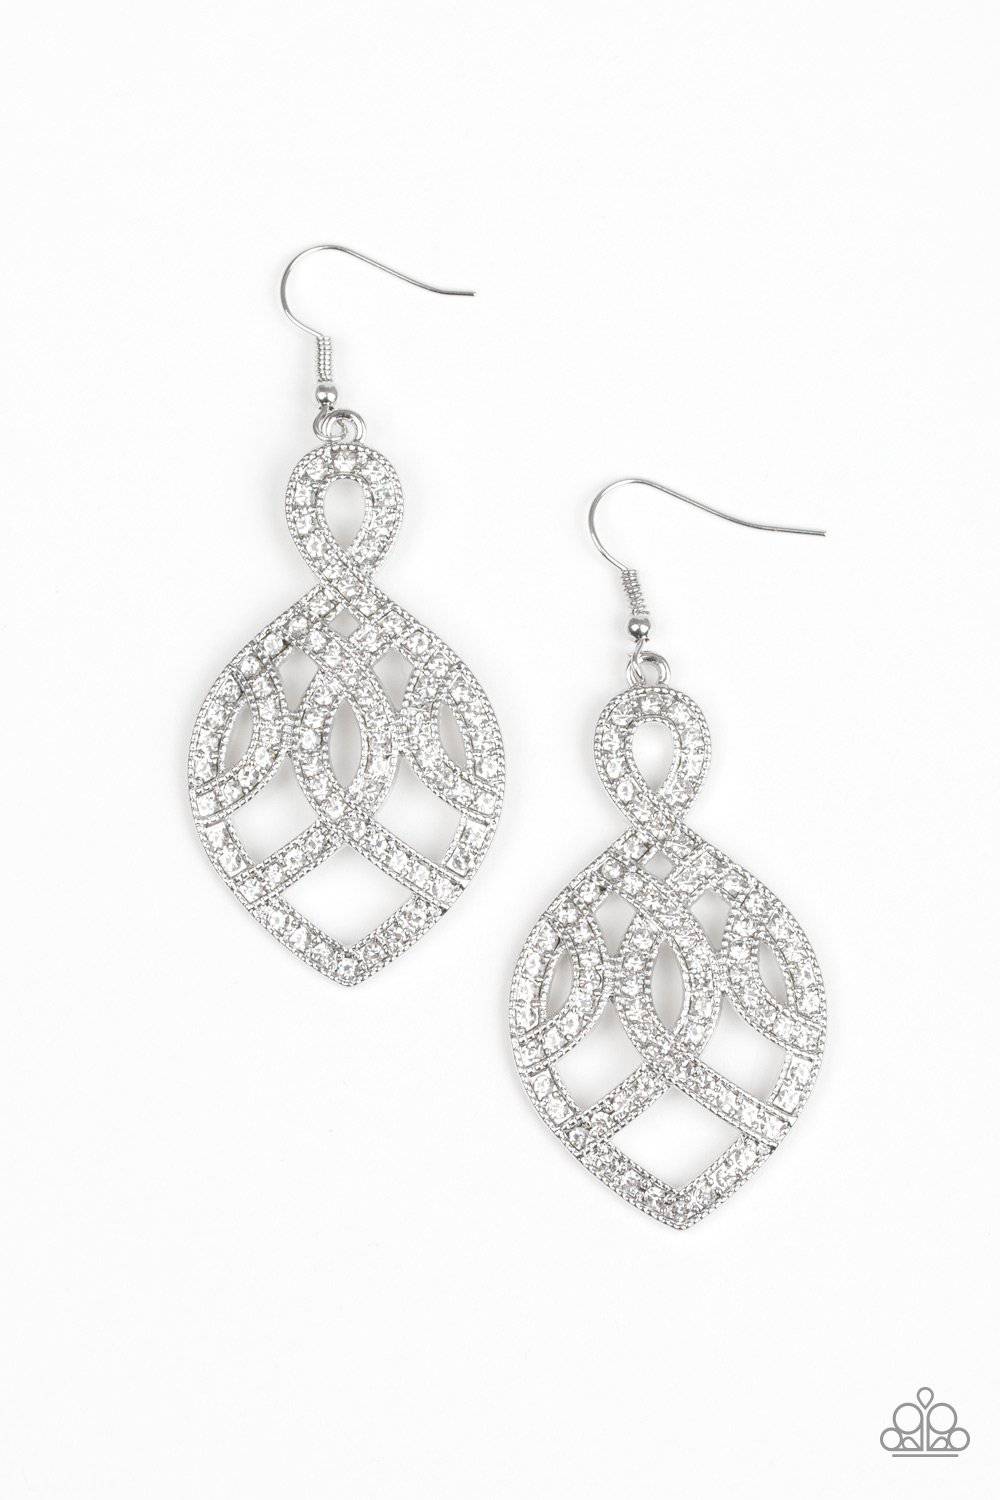 A Grand Statement - White Rhinestone Earrings - Paparazzi Accessories - GlaMarous Titi Jewels